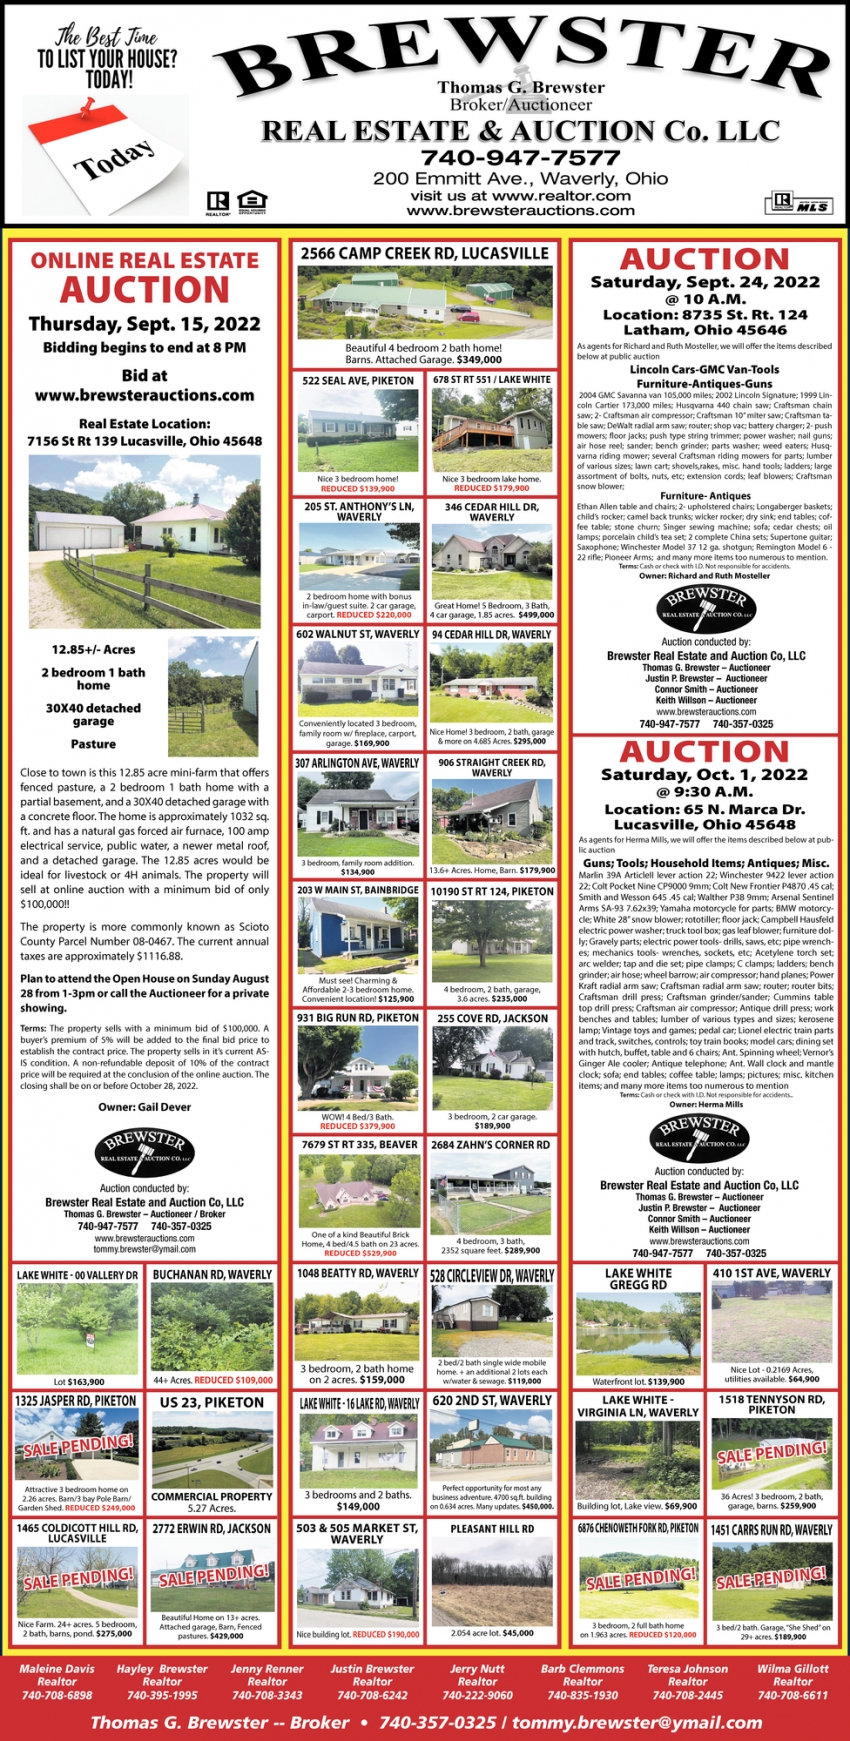 Online Real Estate Auction